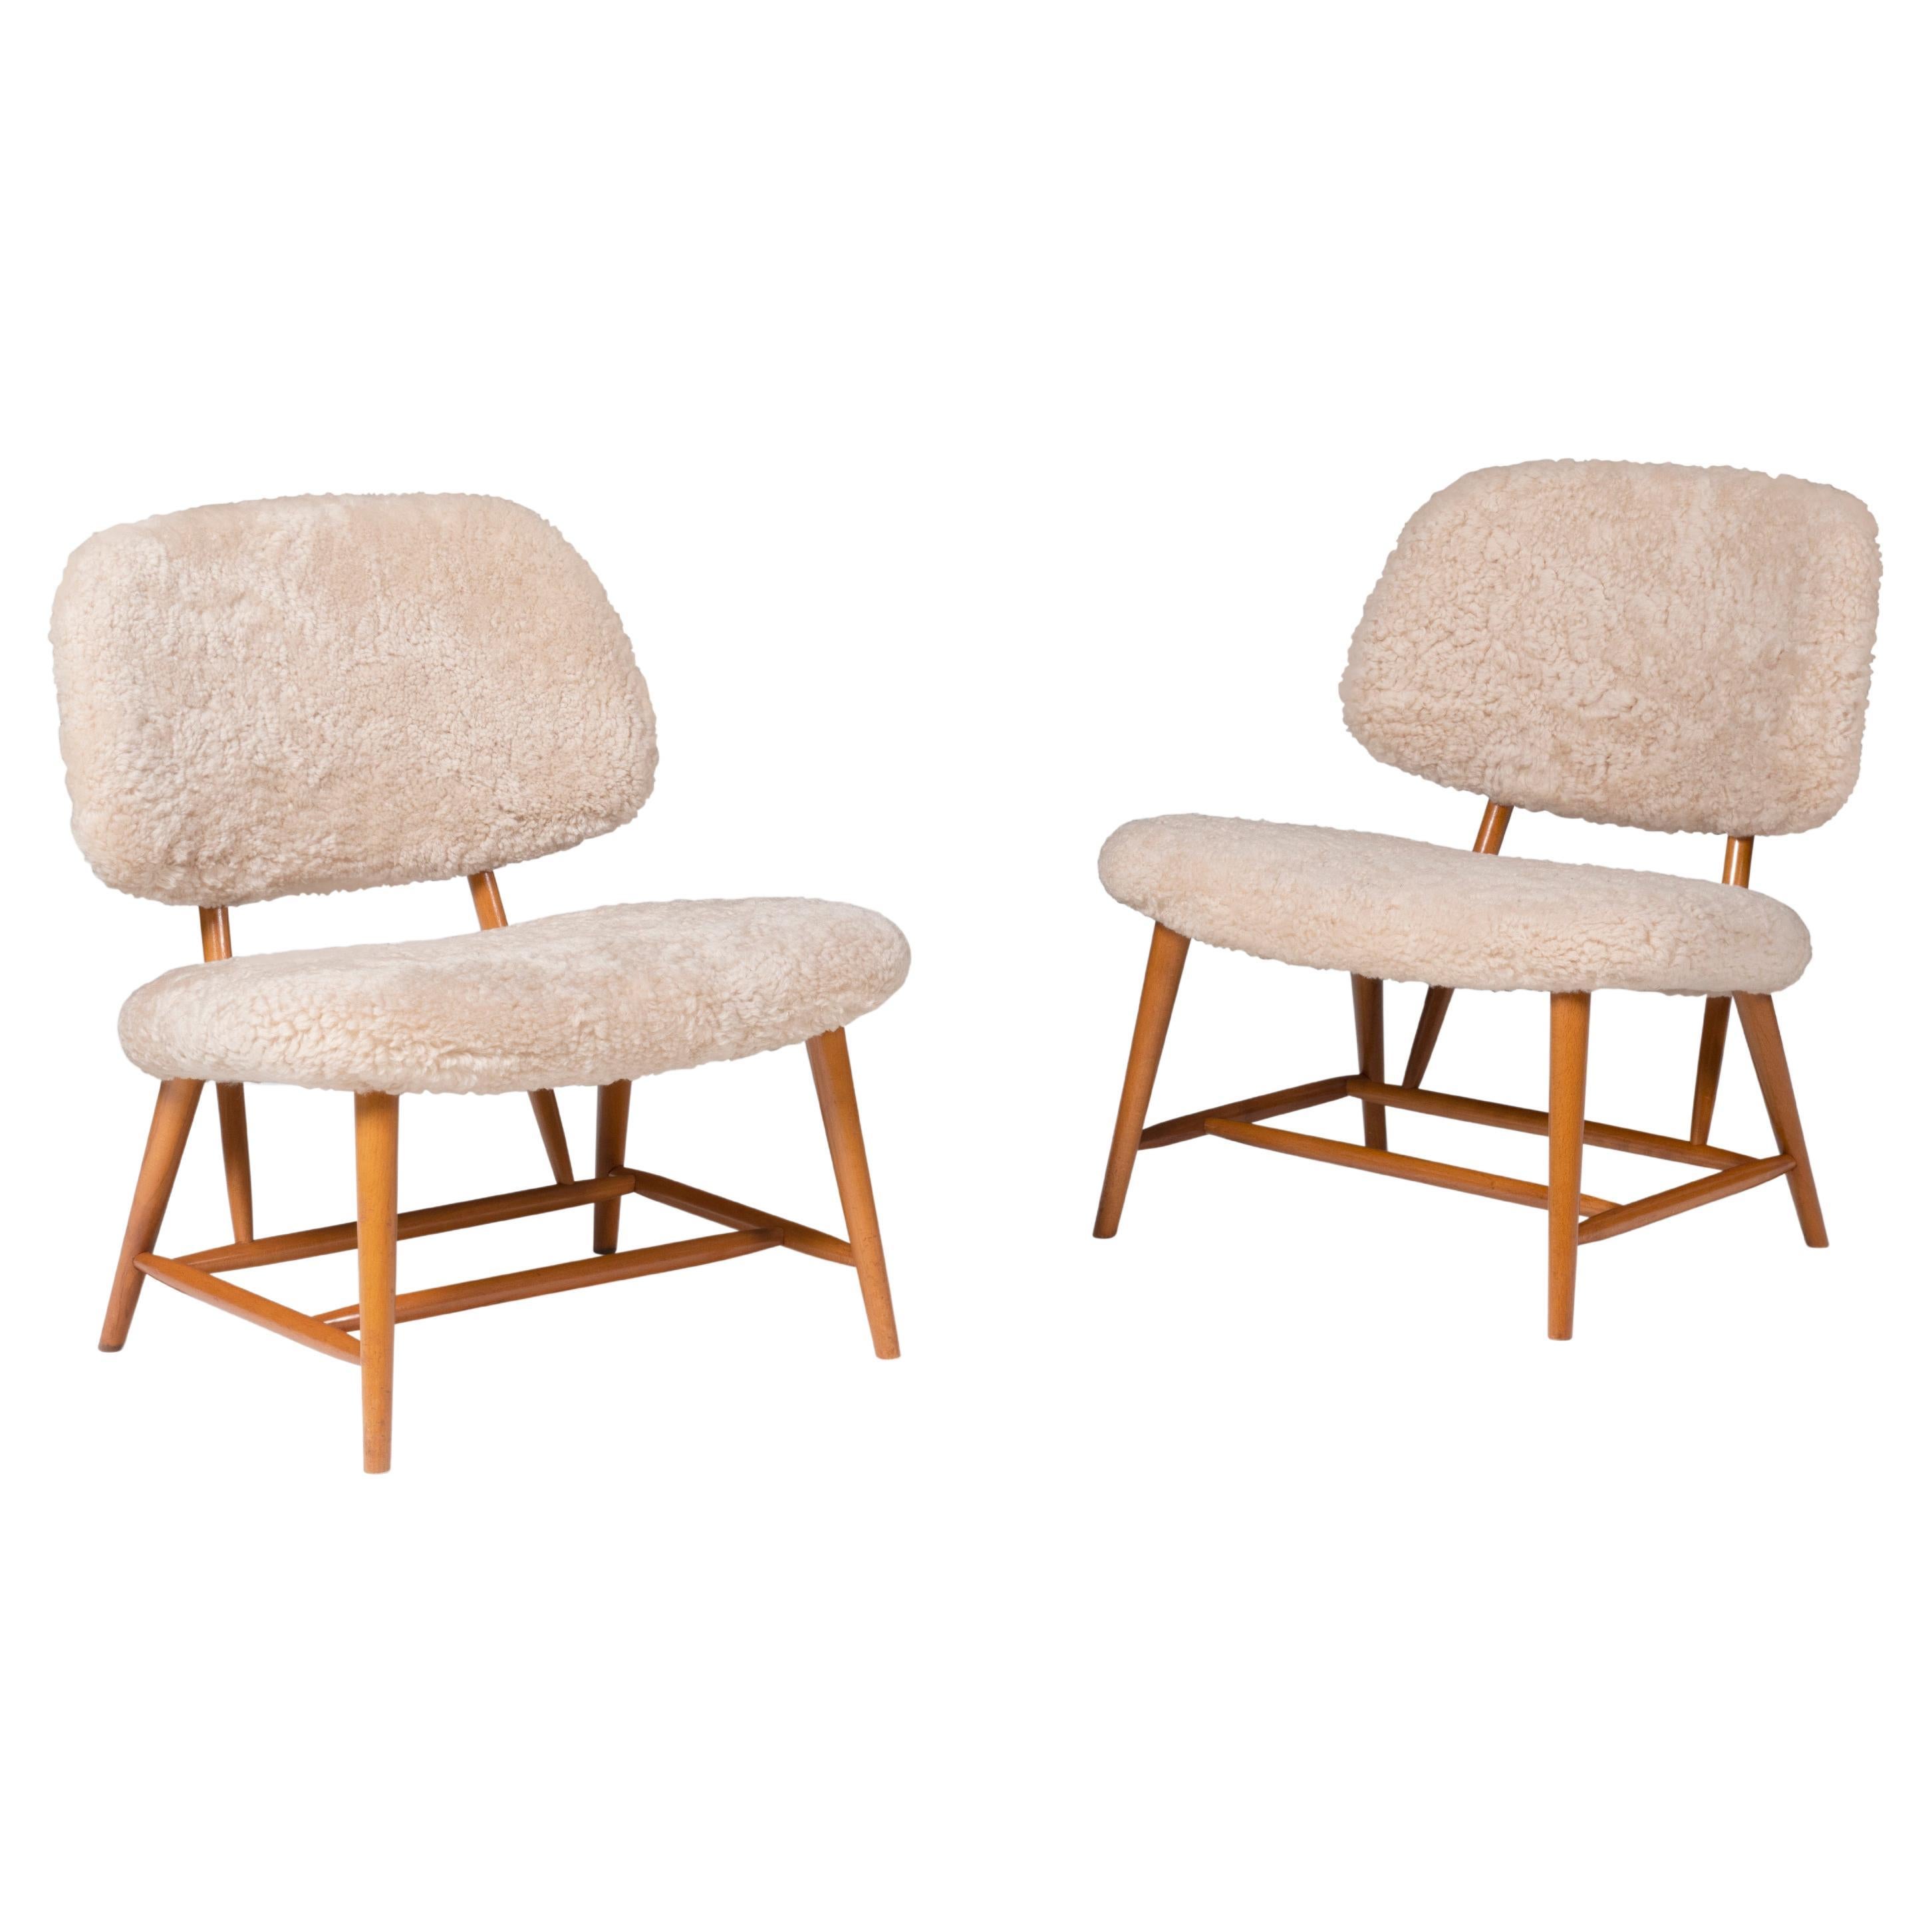 Pair of Swedish Modern Alf Svensson "Teve" Chair Reupholstered in Sheepskin